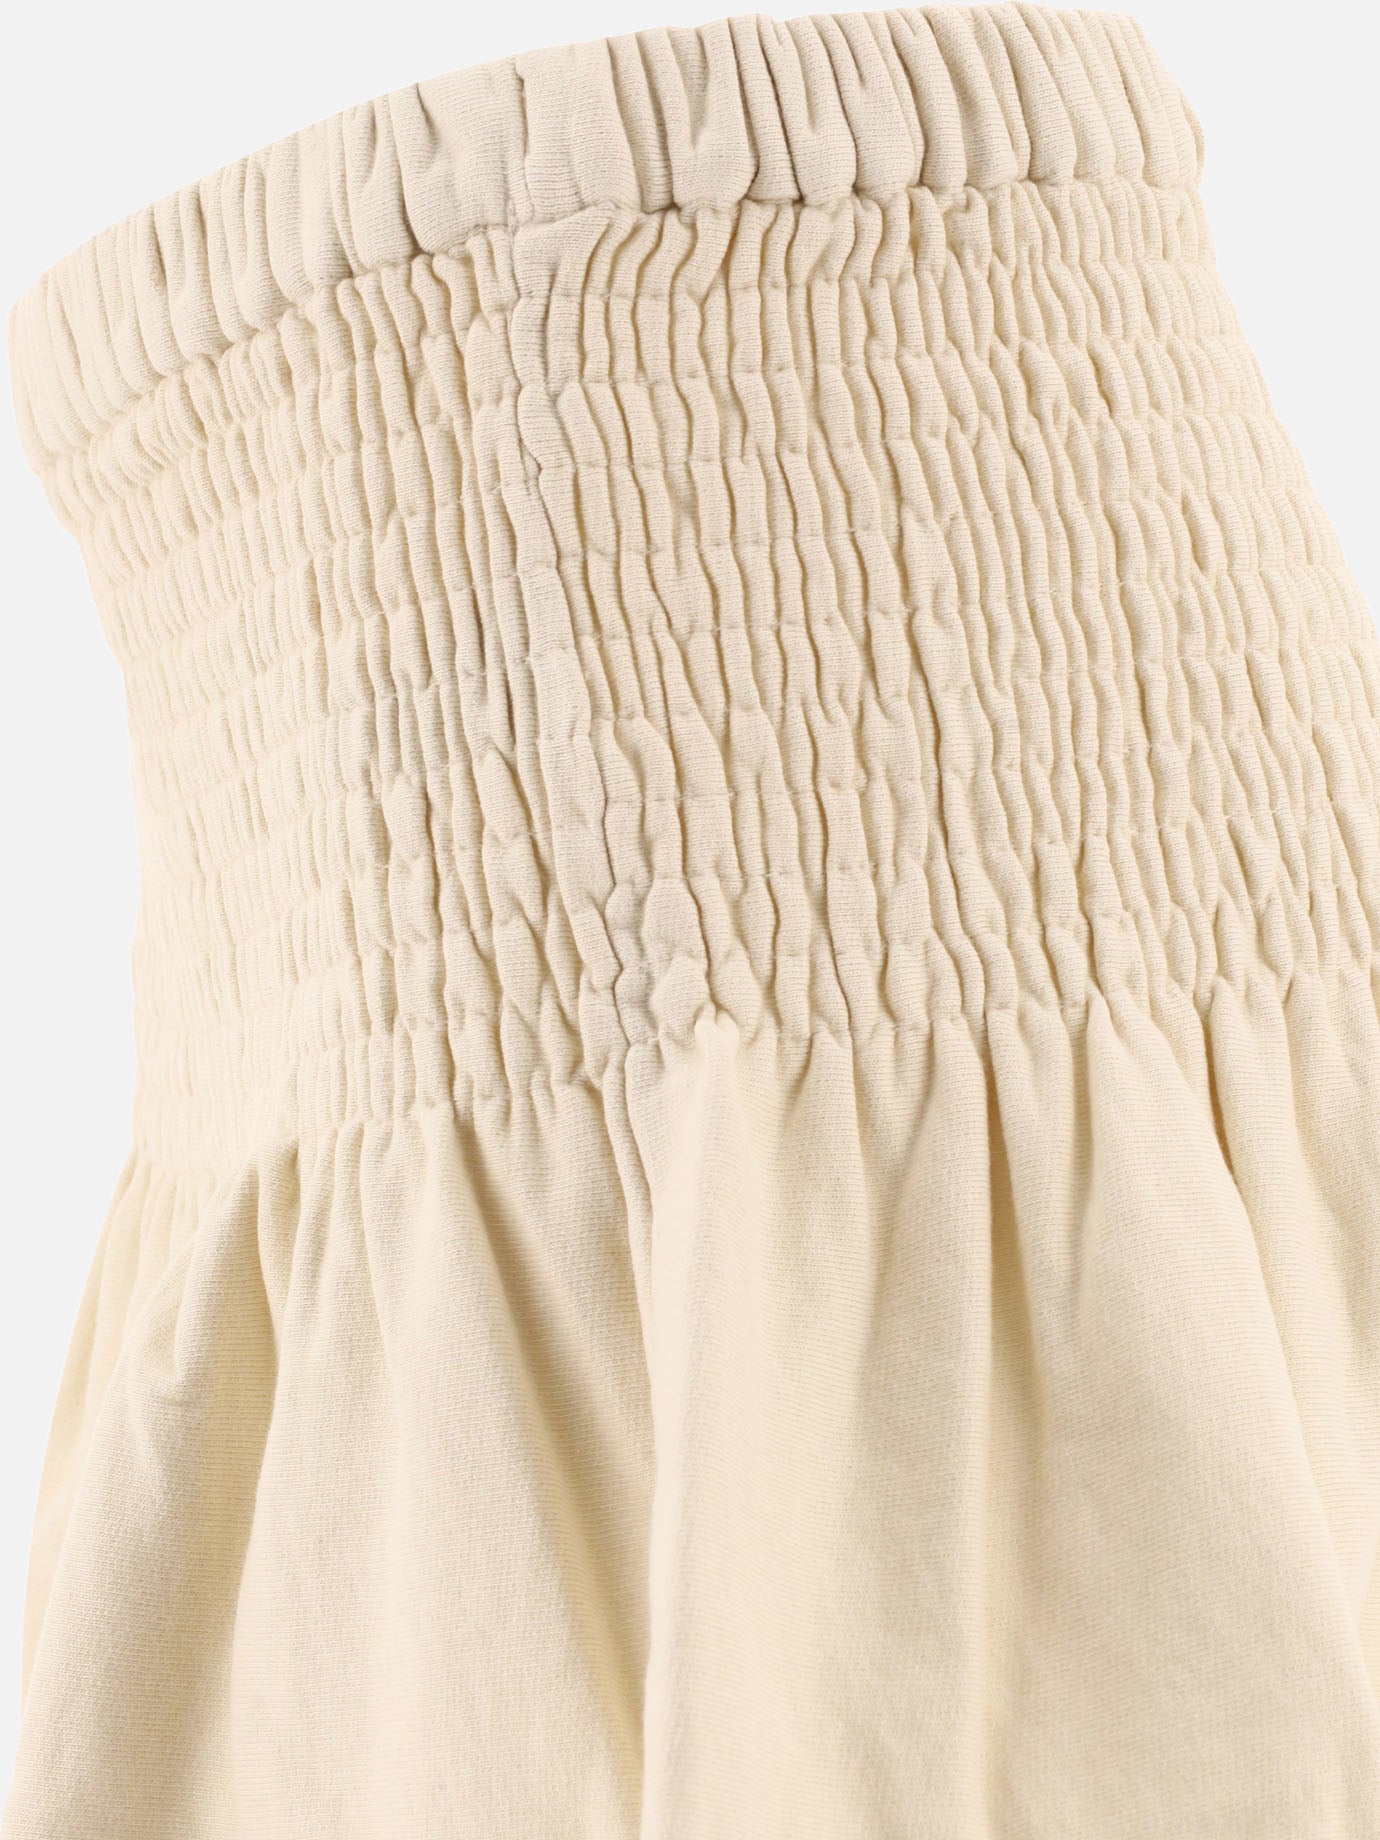 "Pacifica" skirt